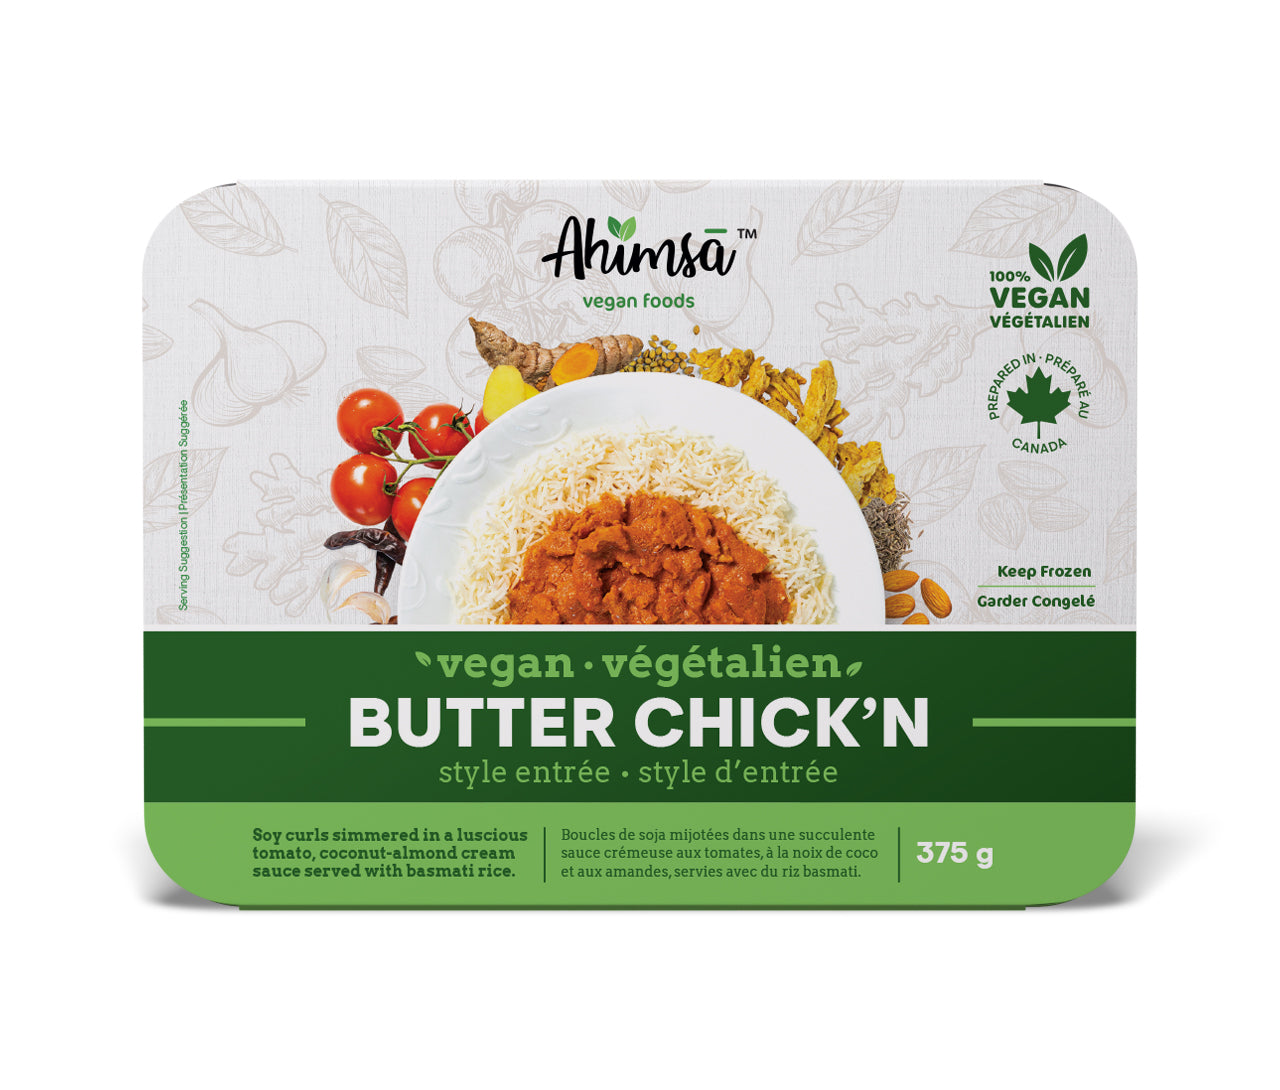 Vegan Butter Chick'n - Ahimsa Vegan Foods